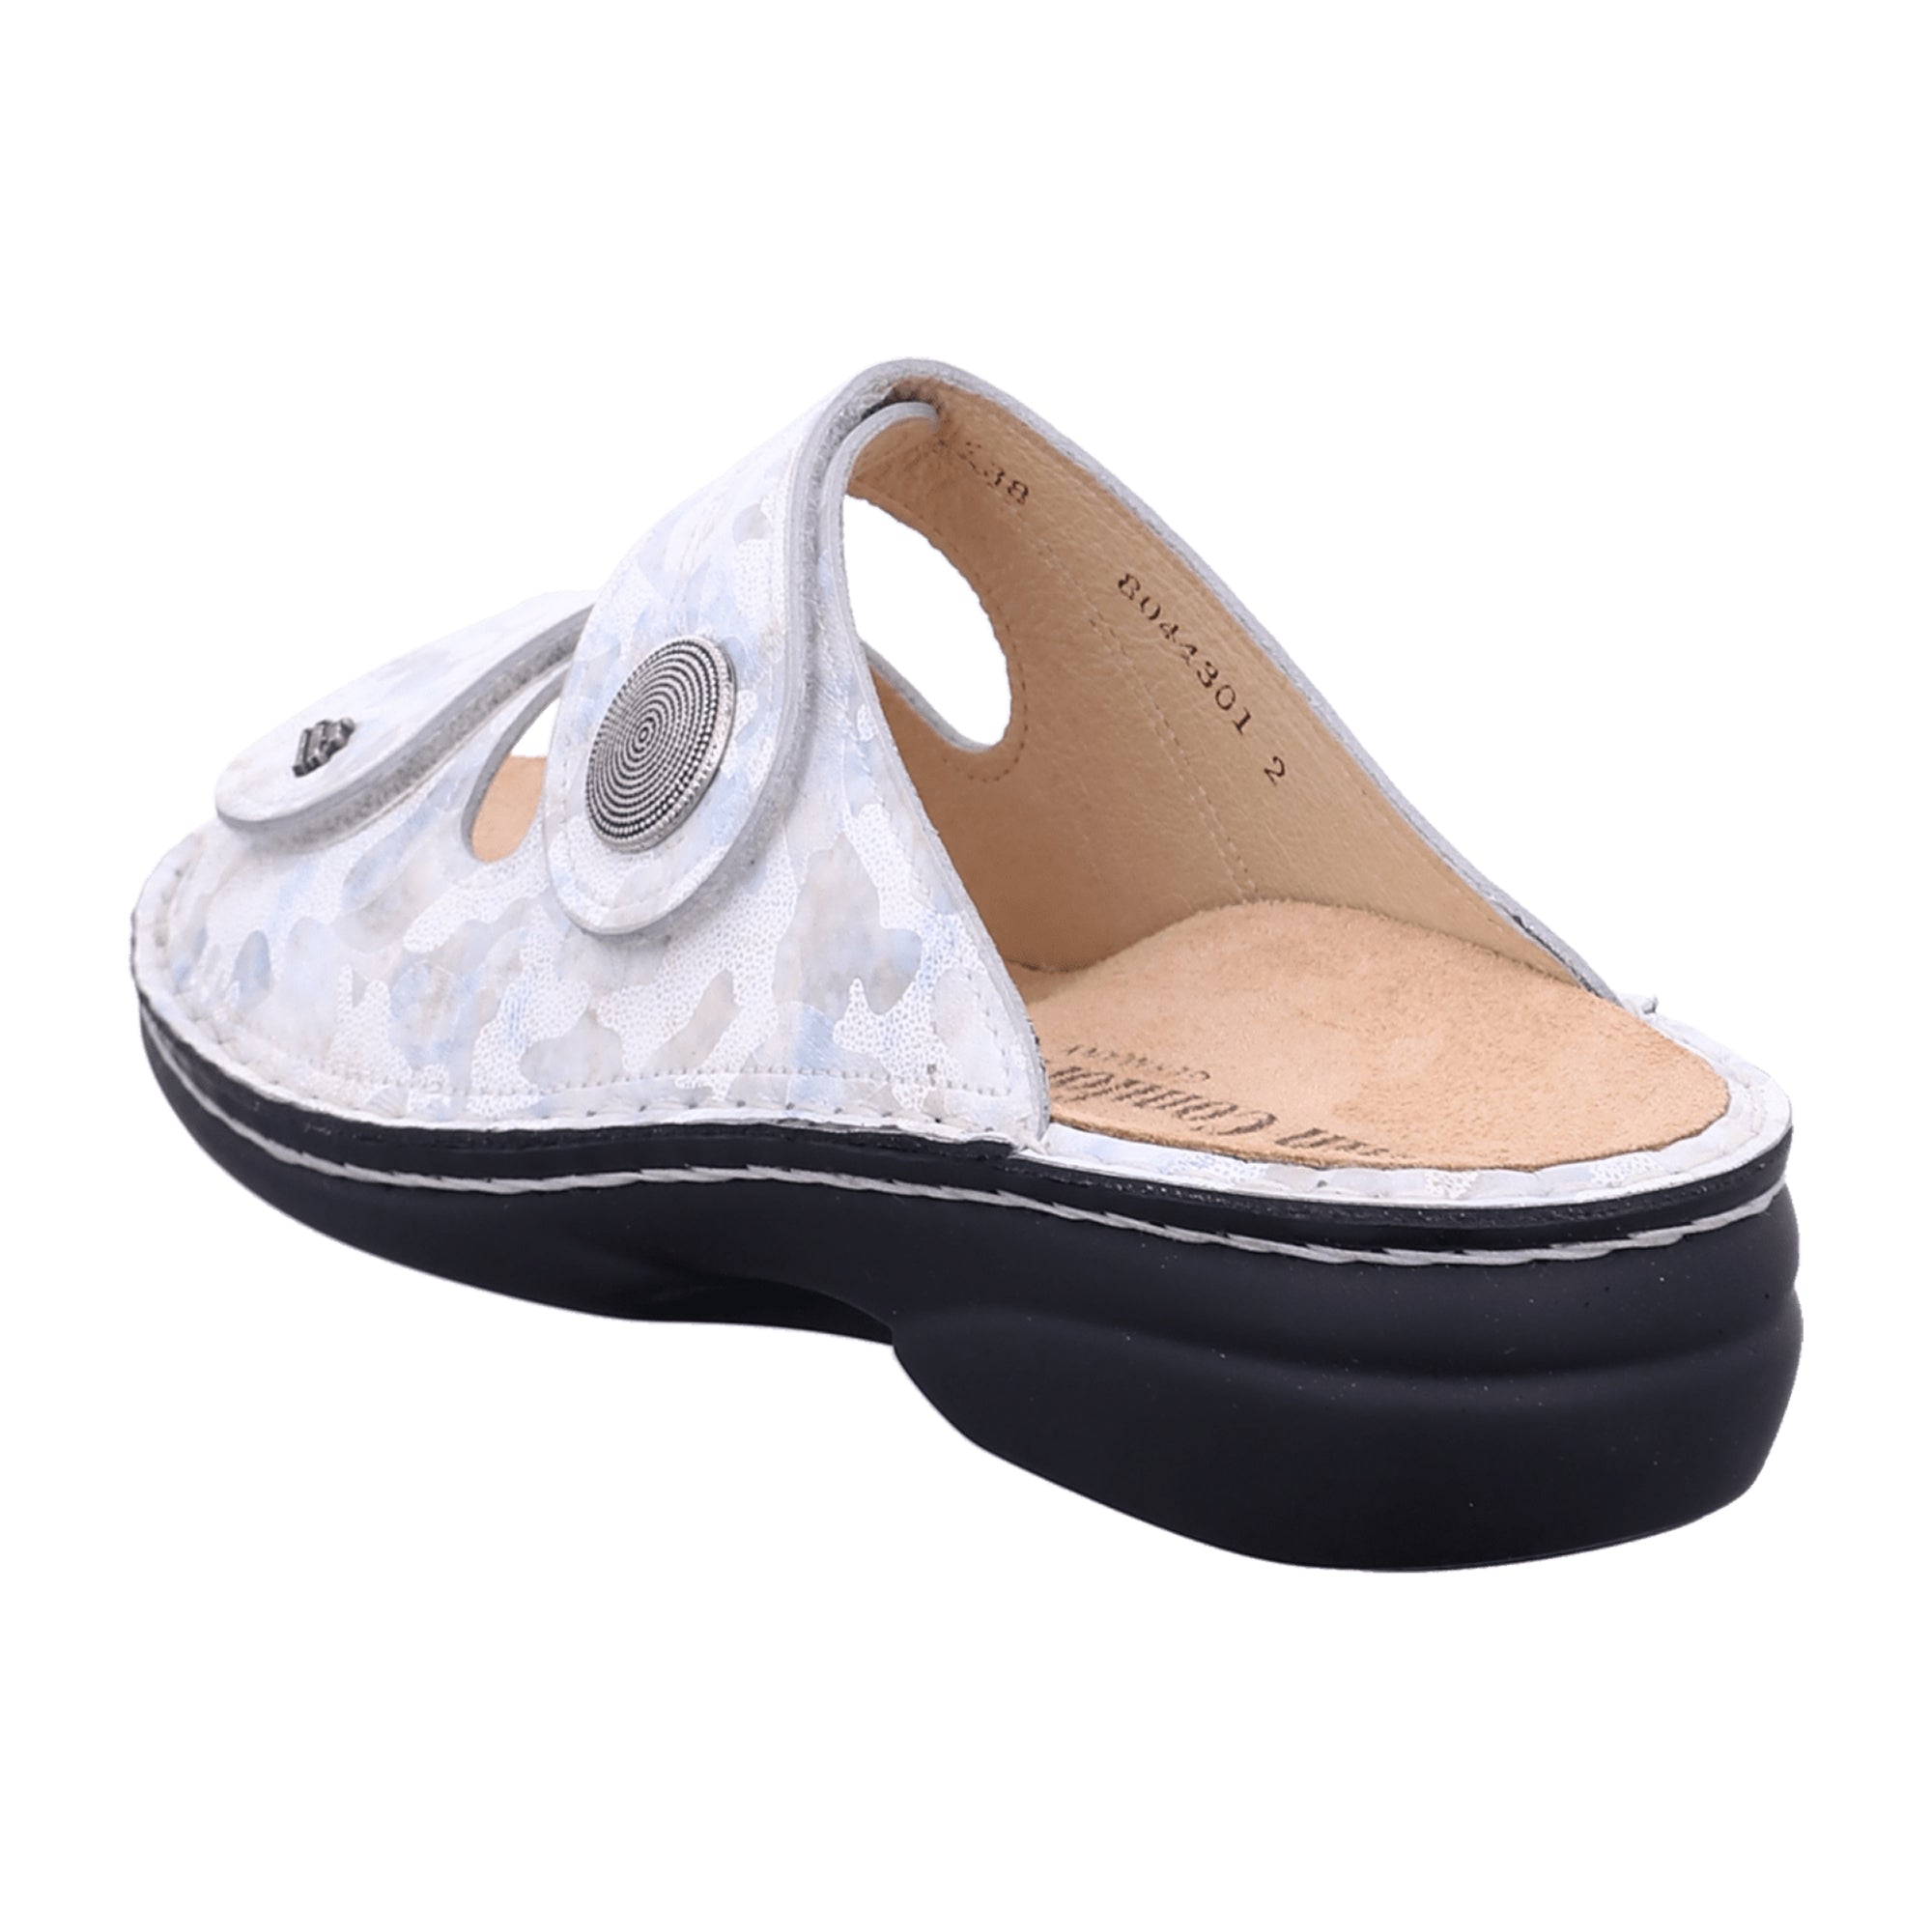 Finn Comfort Women's White Comfort Shoes - Durable & Stylish, Model 2550-764485